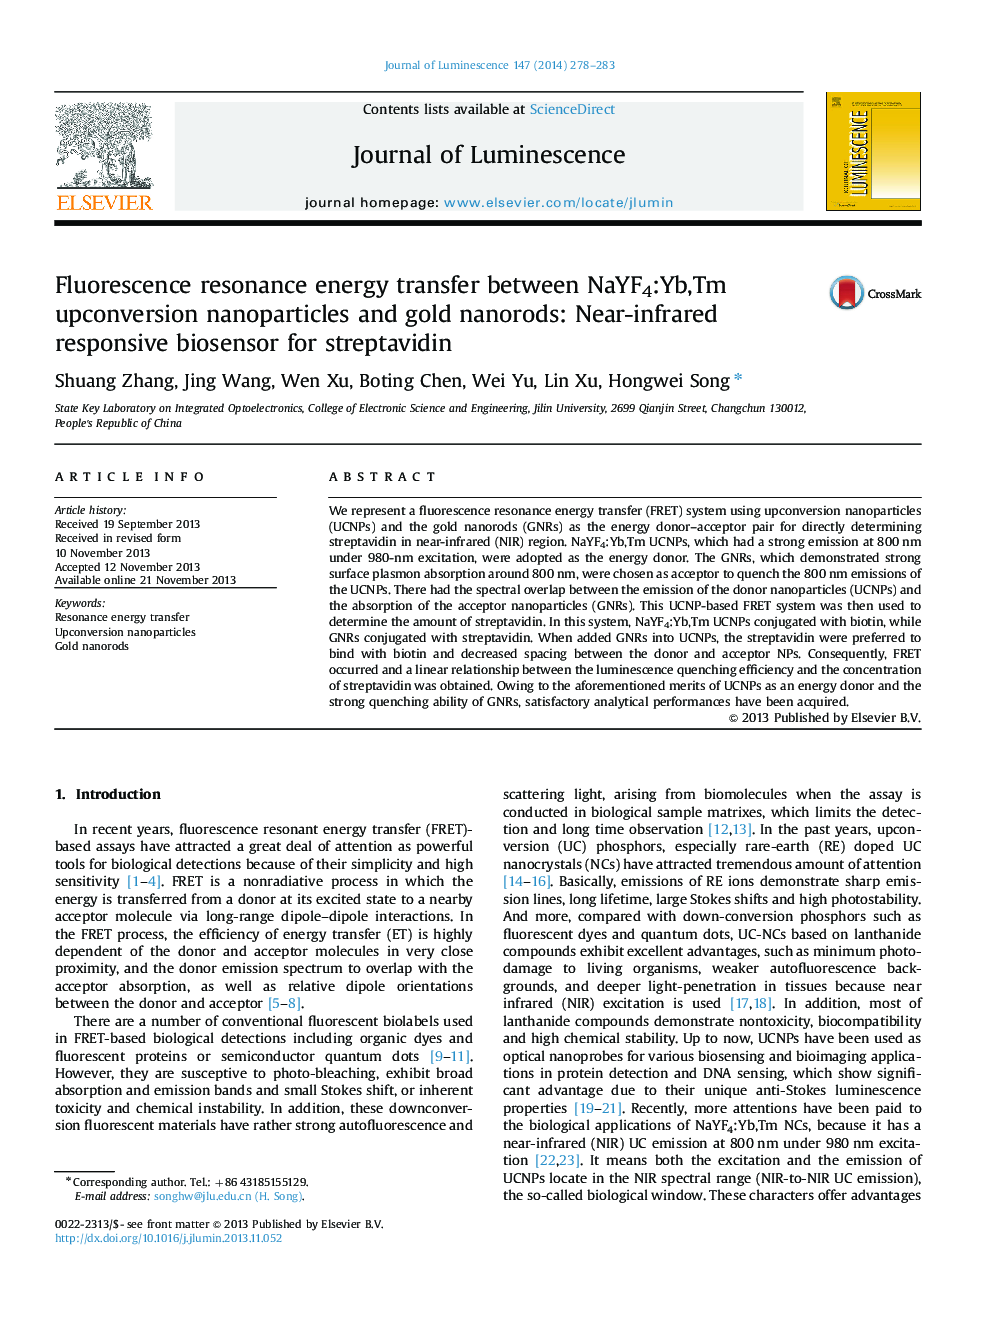 Fluorescence resonance energy transfer between NaYF4:Yb,Tm upconversion nanoparticles and gold nanorods: Near-infrared responsive biosensor for streptavidin